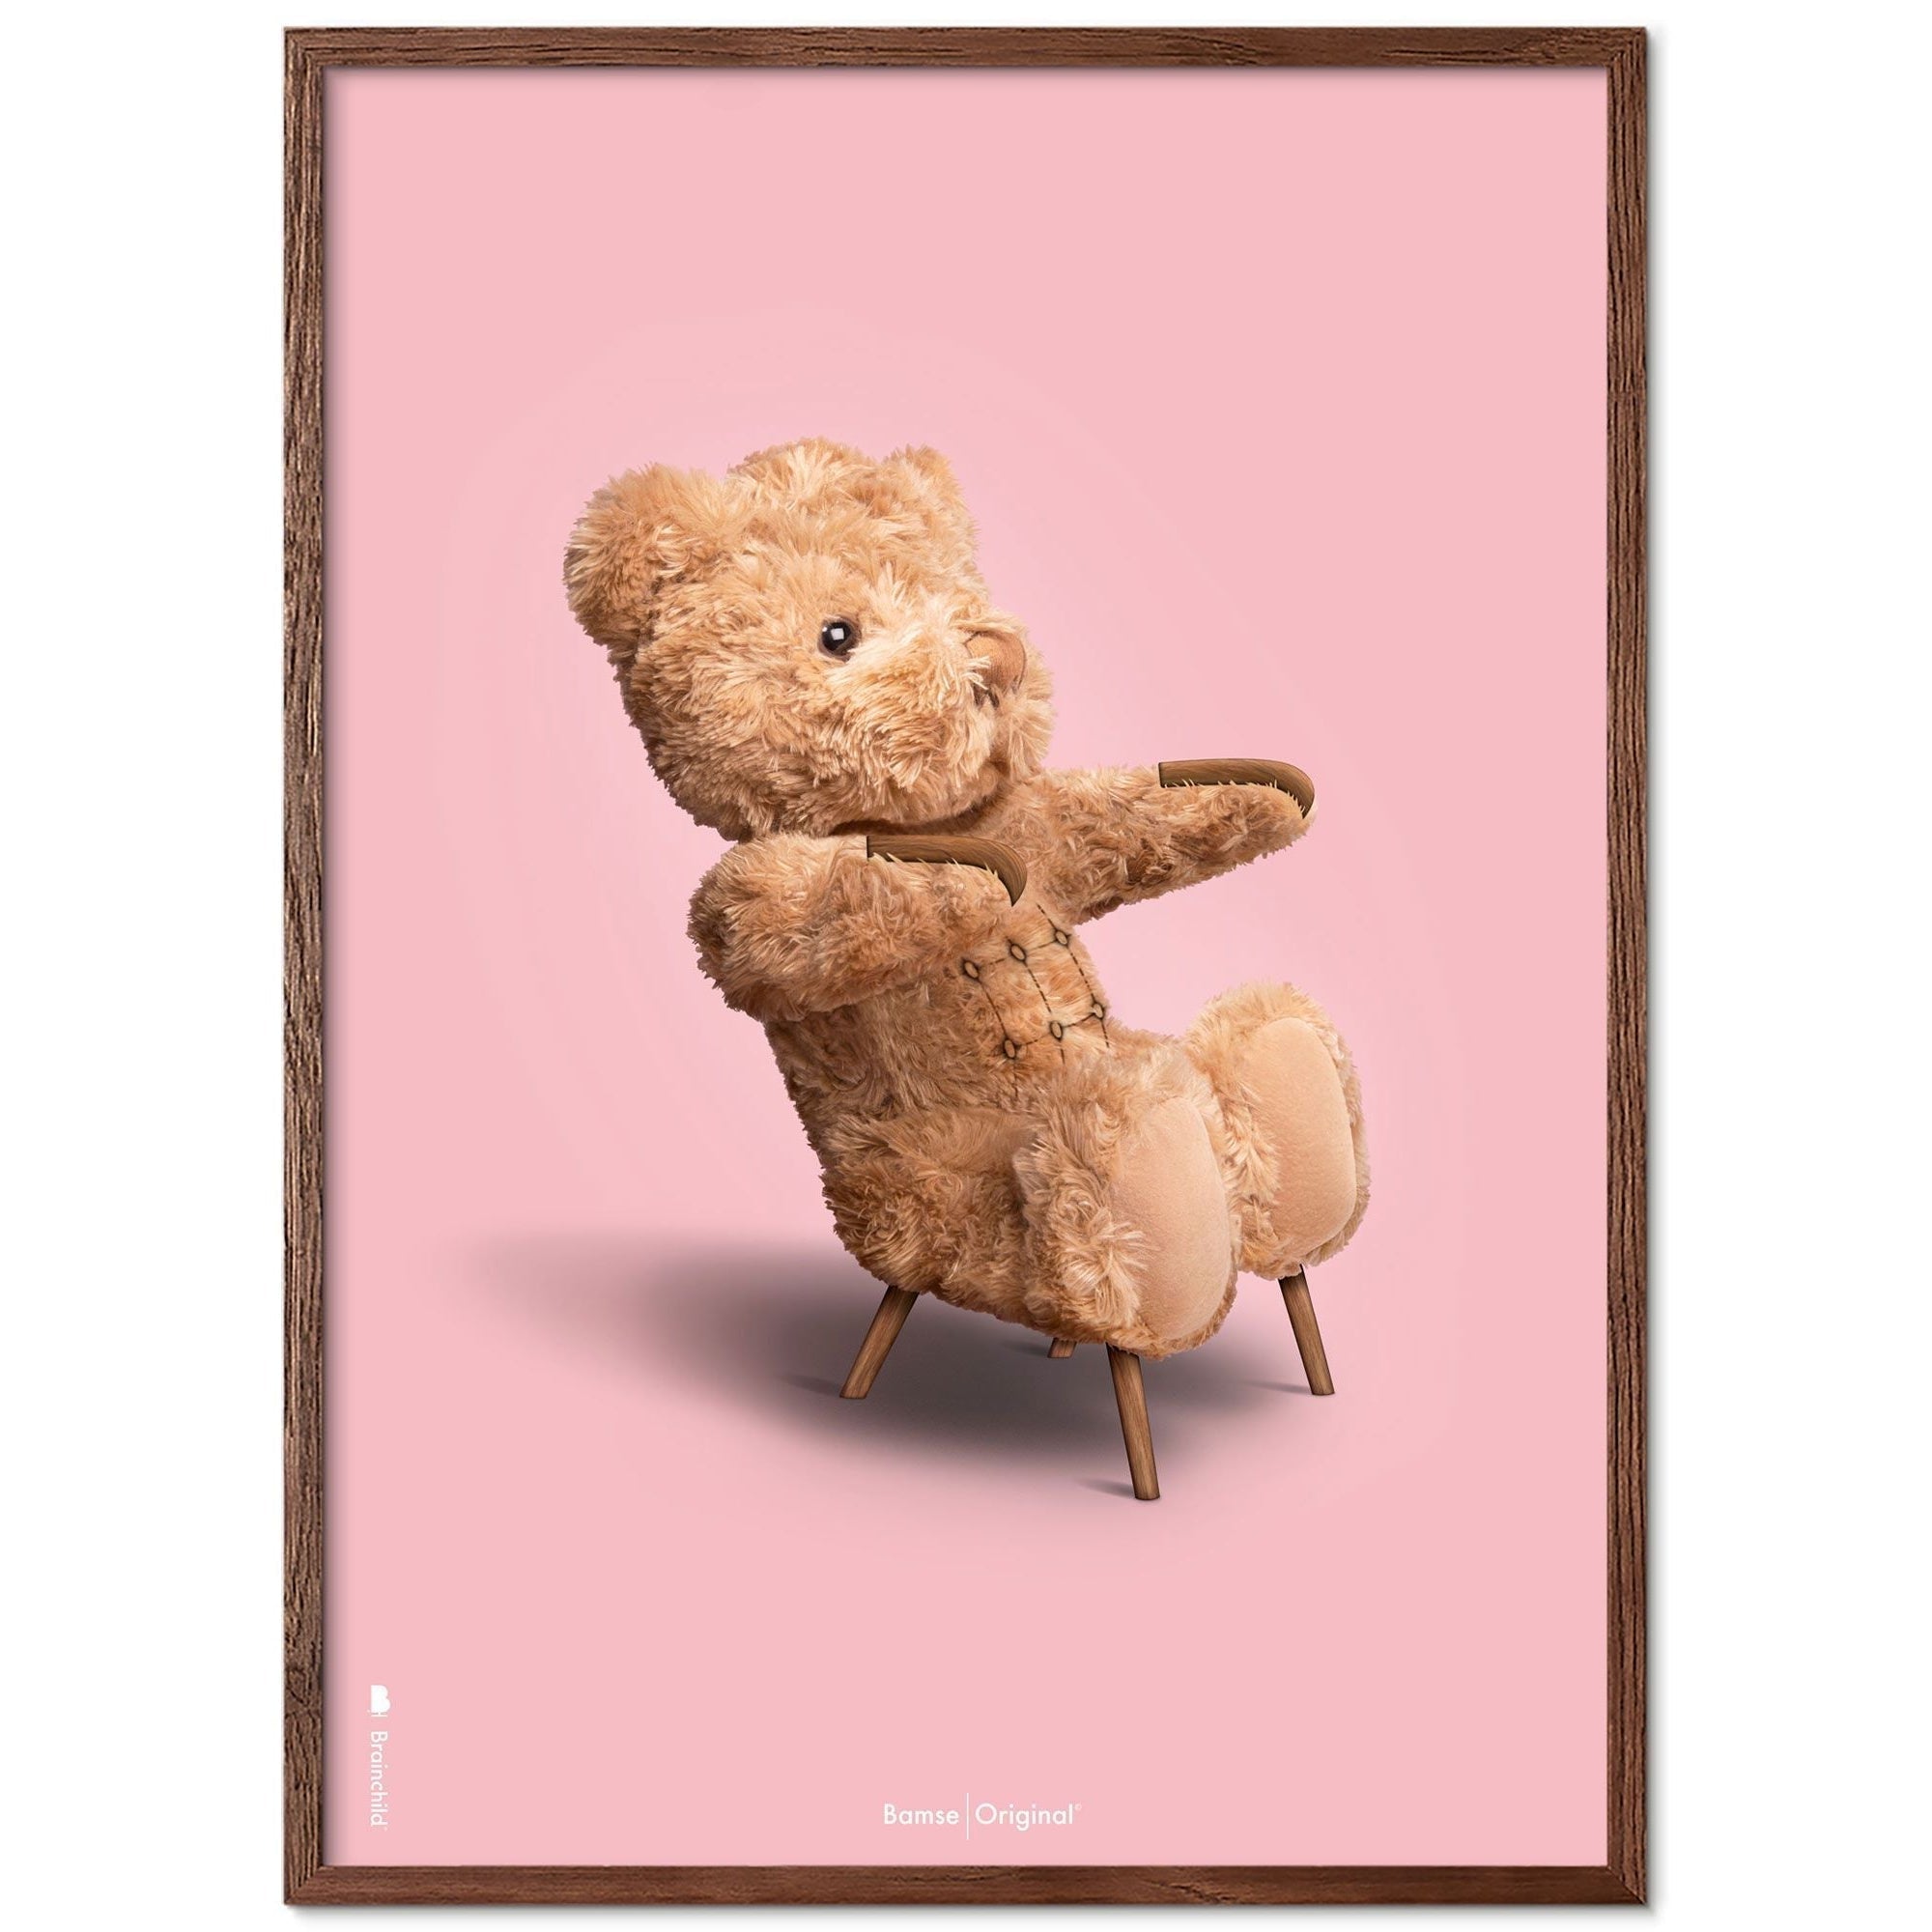 Brainchild Teddybeer klassieke poster donker hout frame ram a5, roze achtergrond